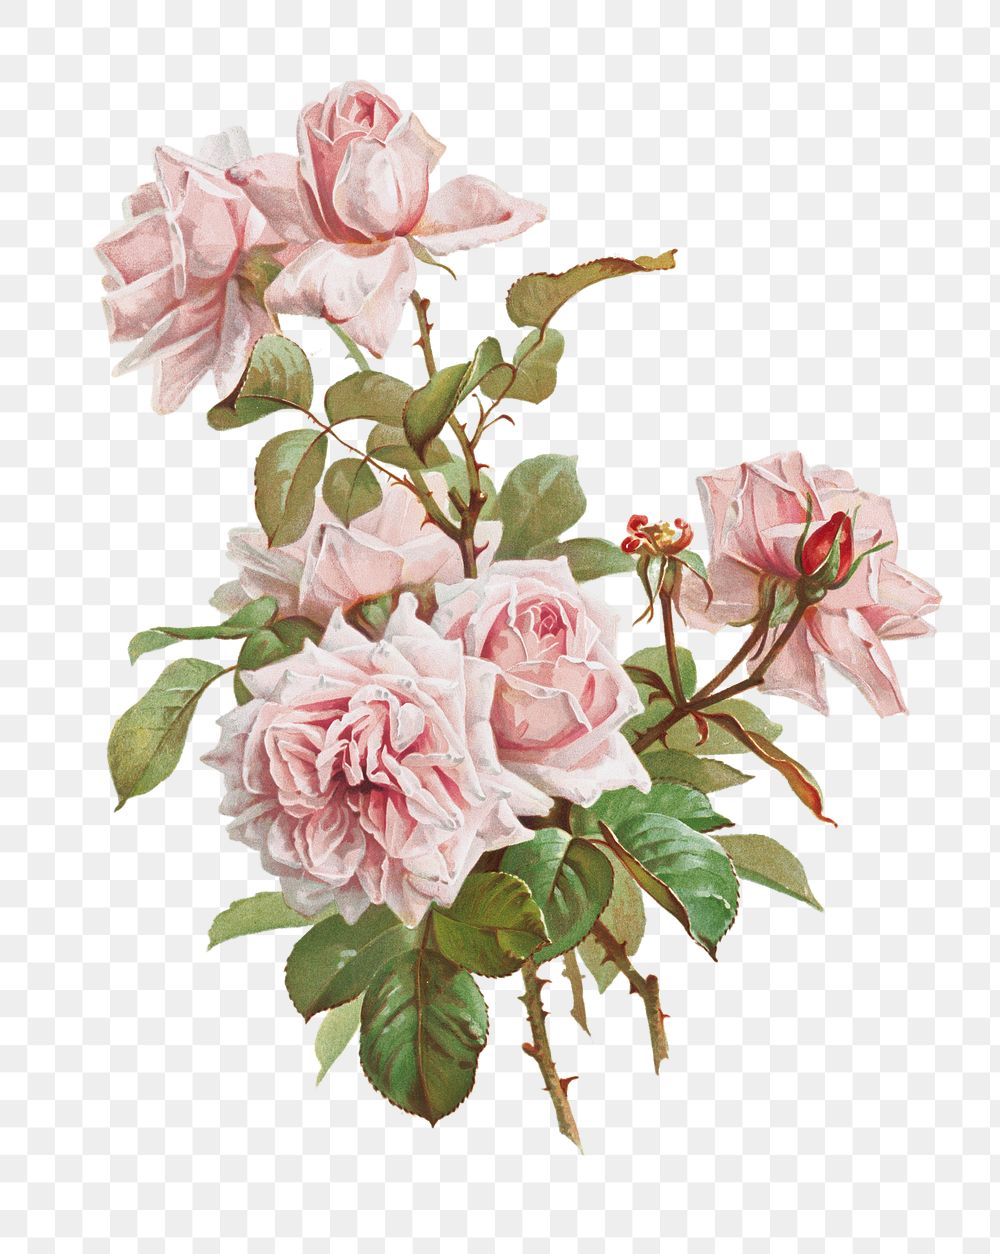 PNG Pink roses; La France roses, vintage flower illustration by J. Bleischwitz, transparent background. Remixed by rawpixel.